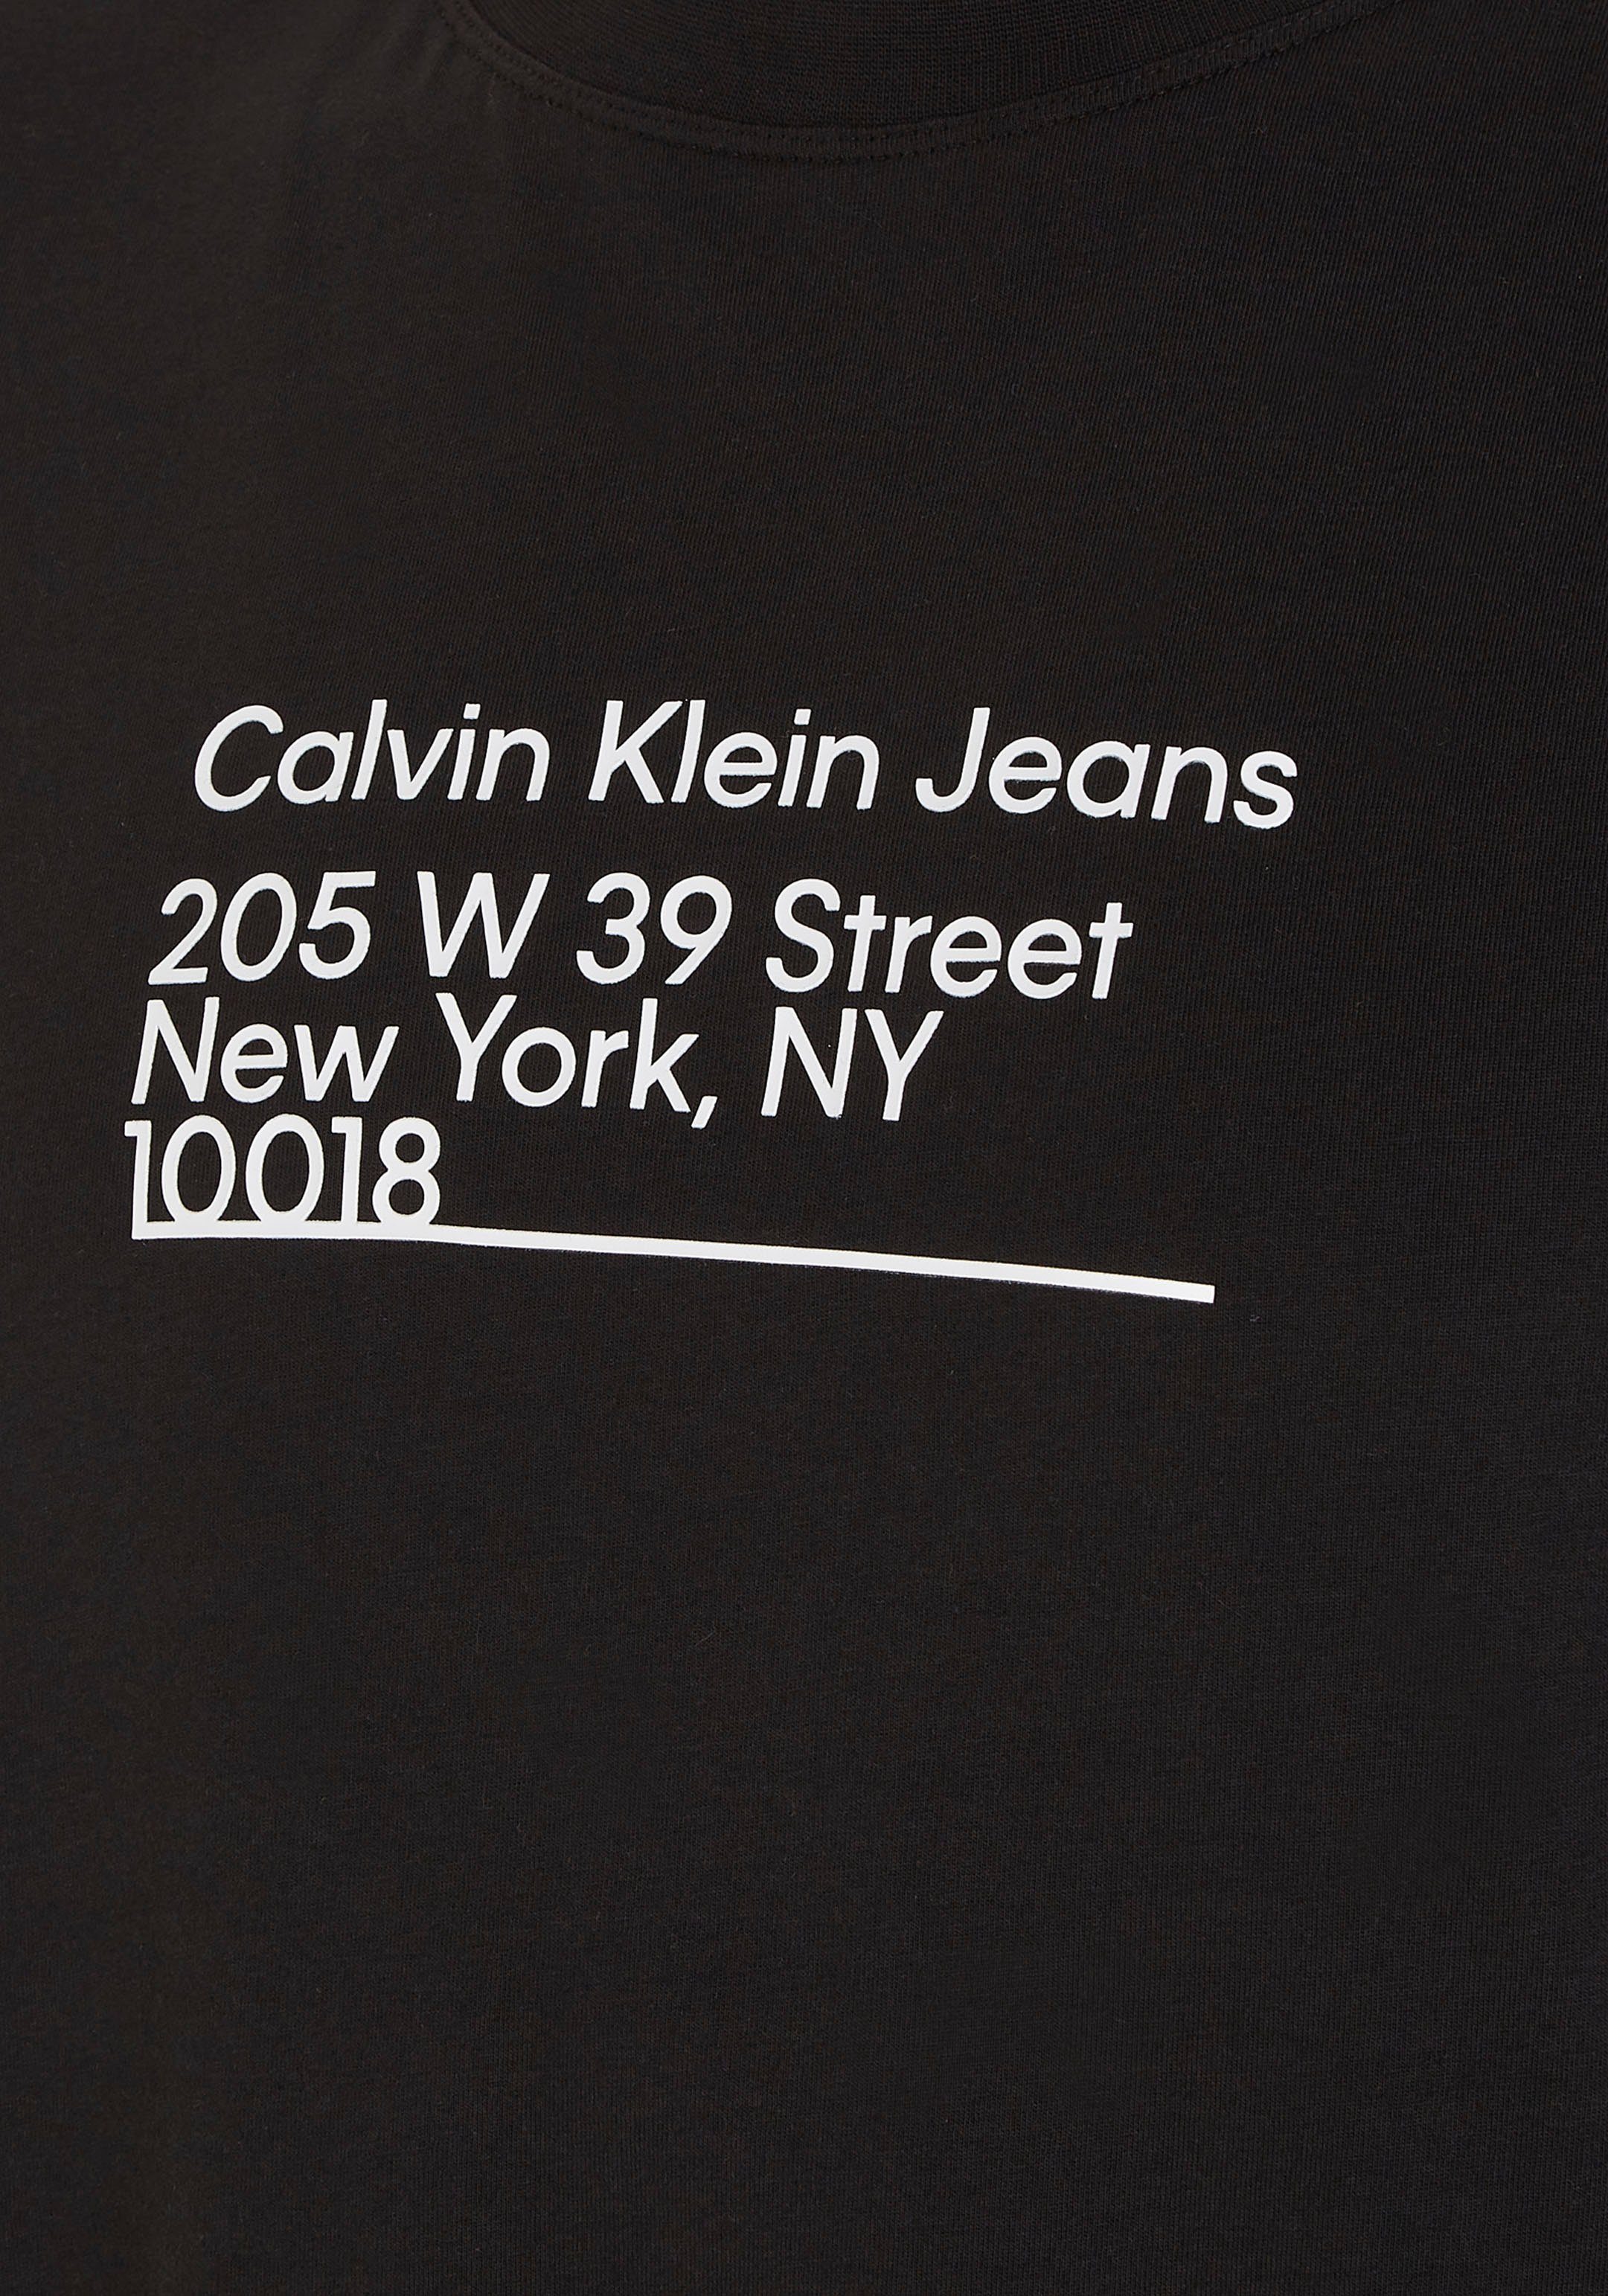 TEE CK PLUS LOGO Jeans T-Shirt Plus Calvin ADDRESS Klein